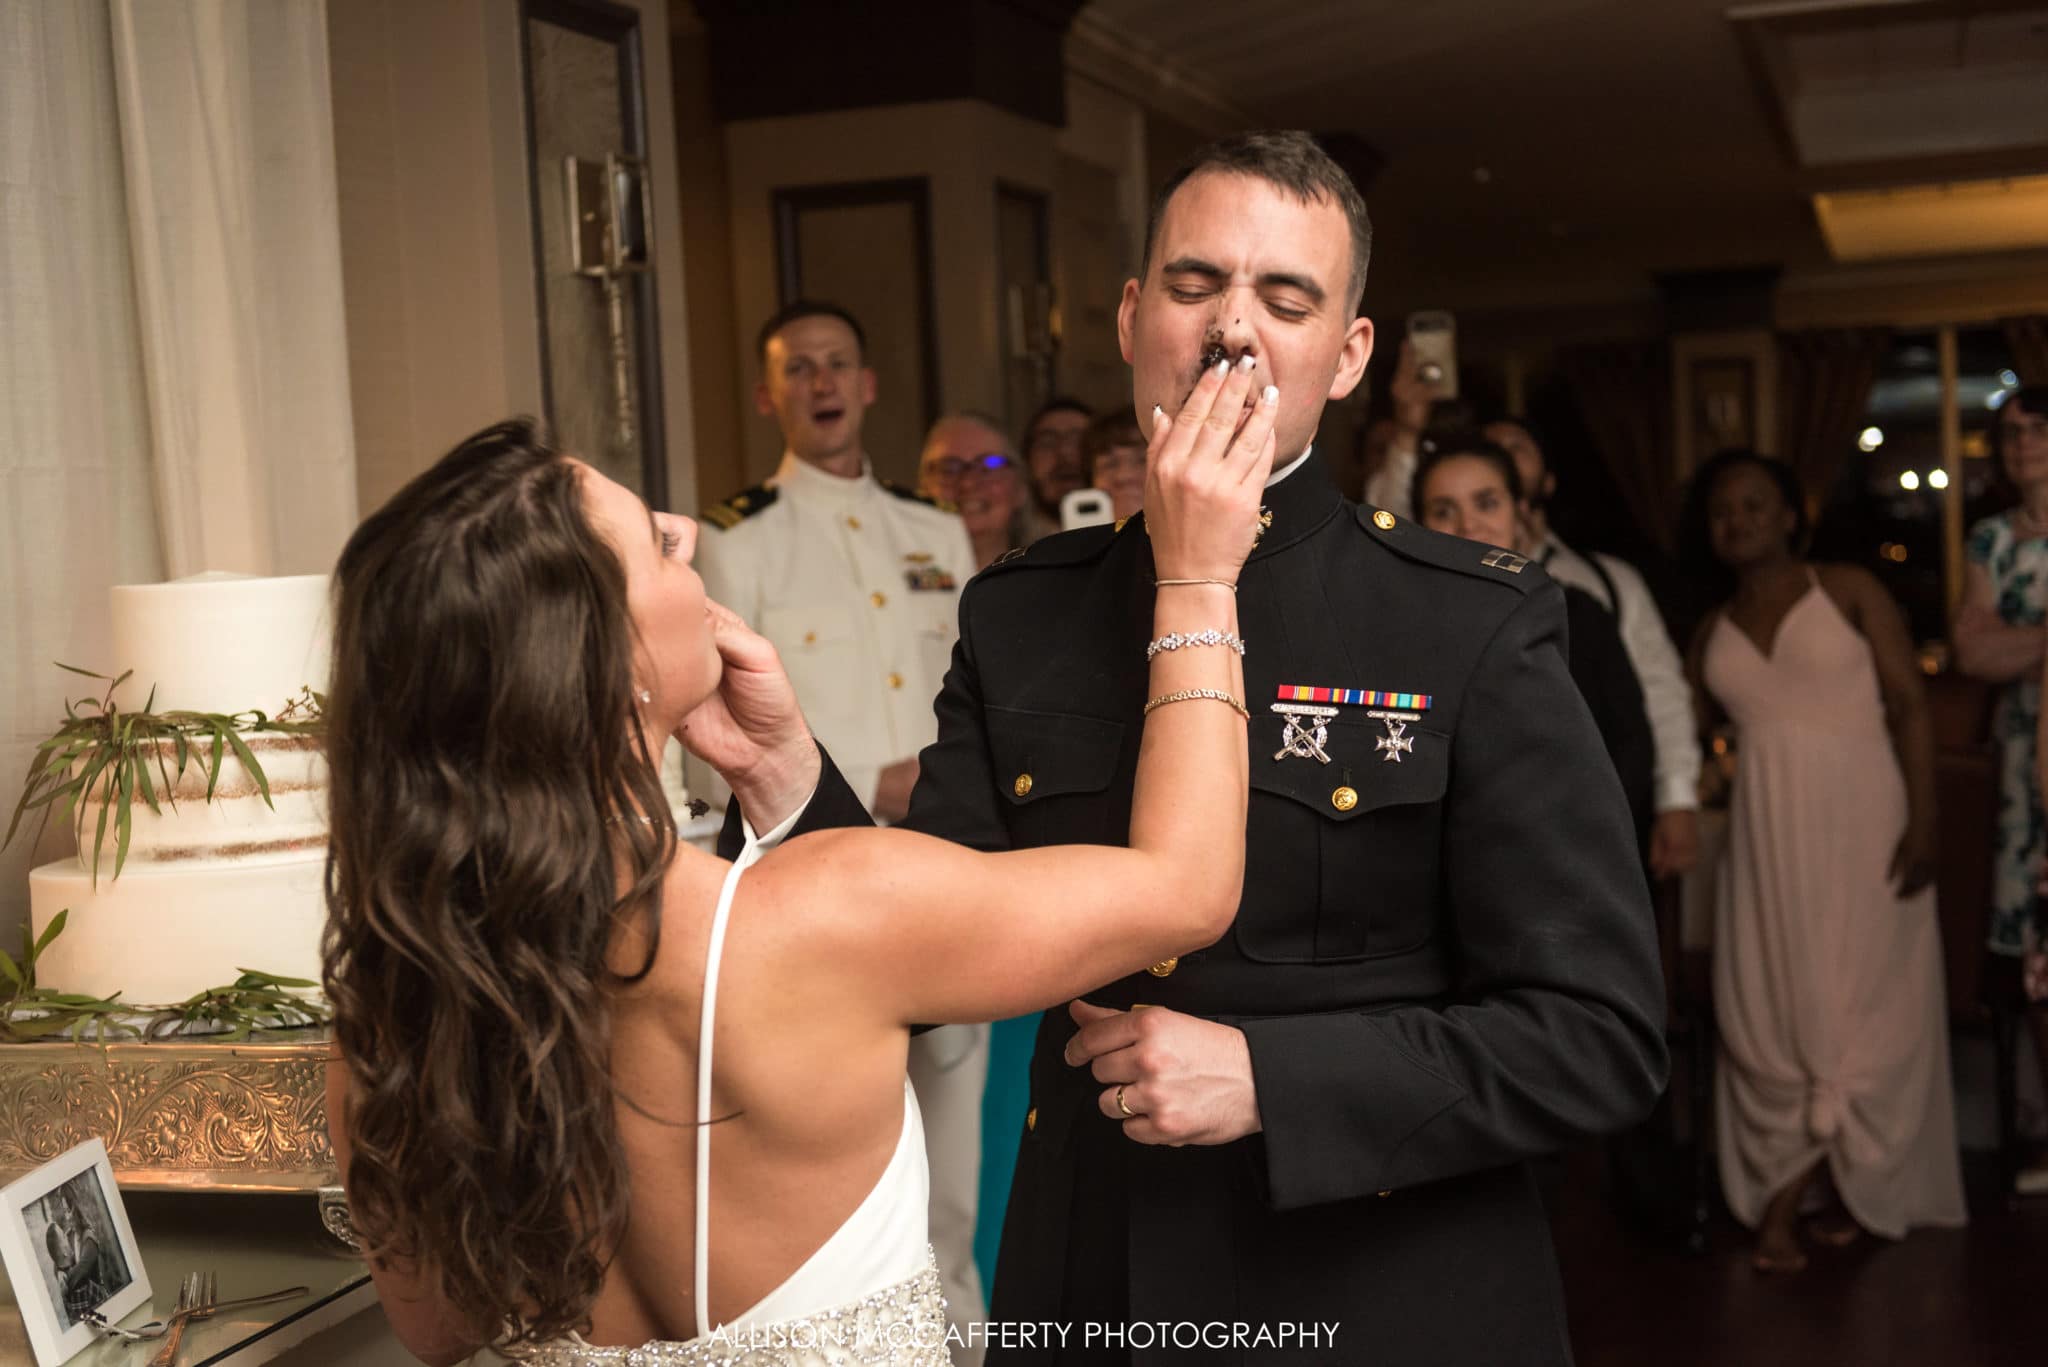 cake smash in grooms face at wedding